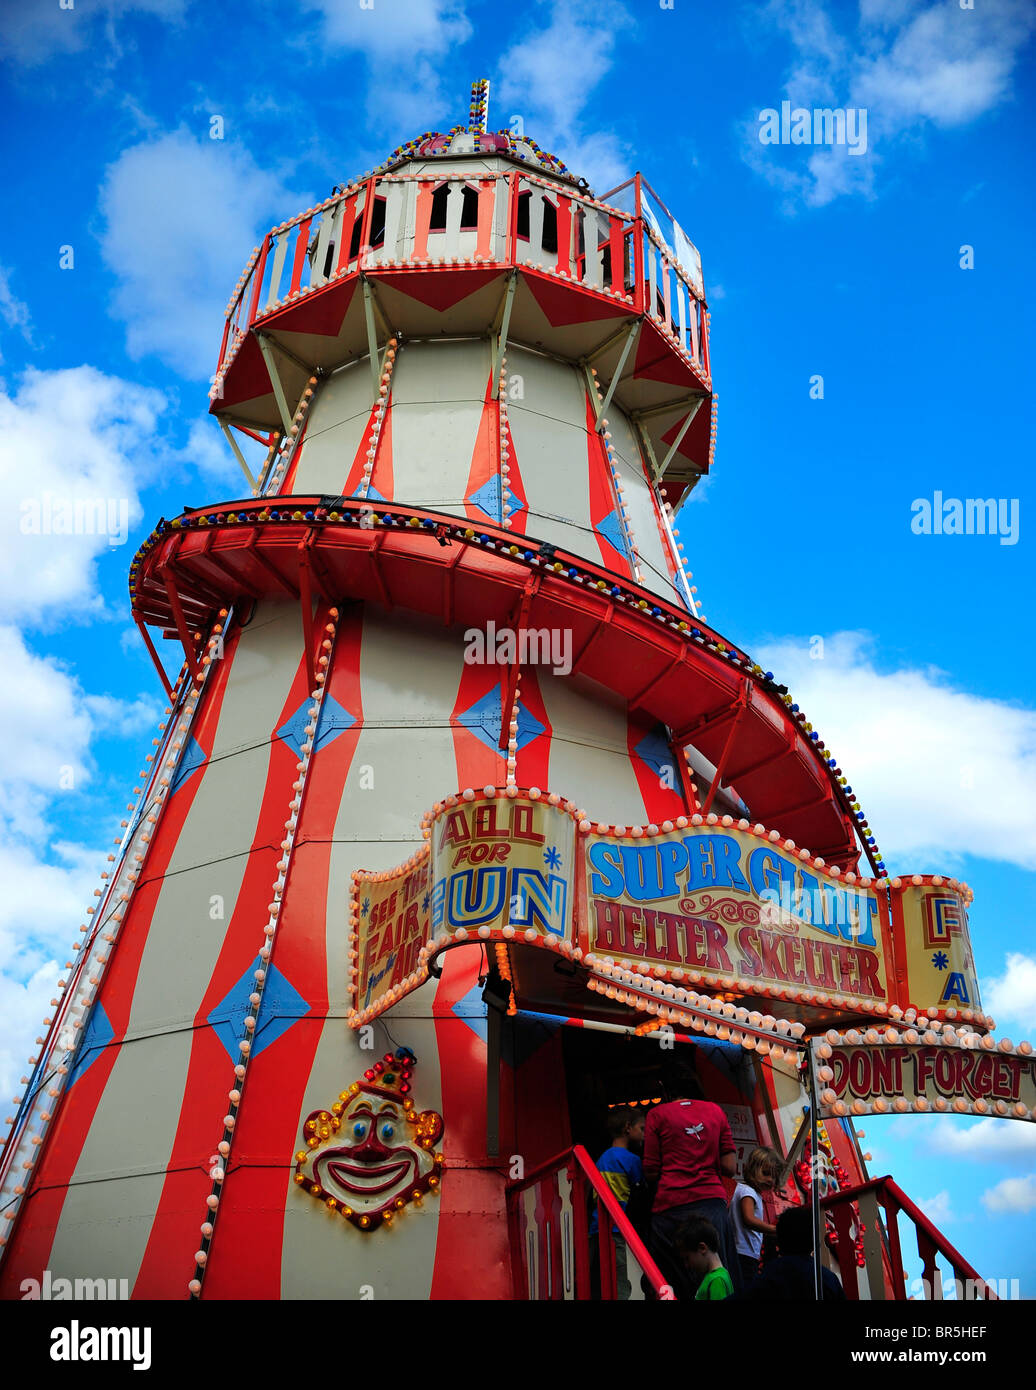 Helter Skelter slide ride at the Thames Festival, London Stock Photo